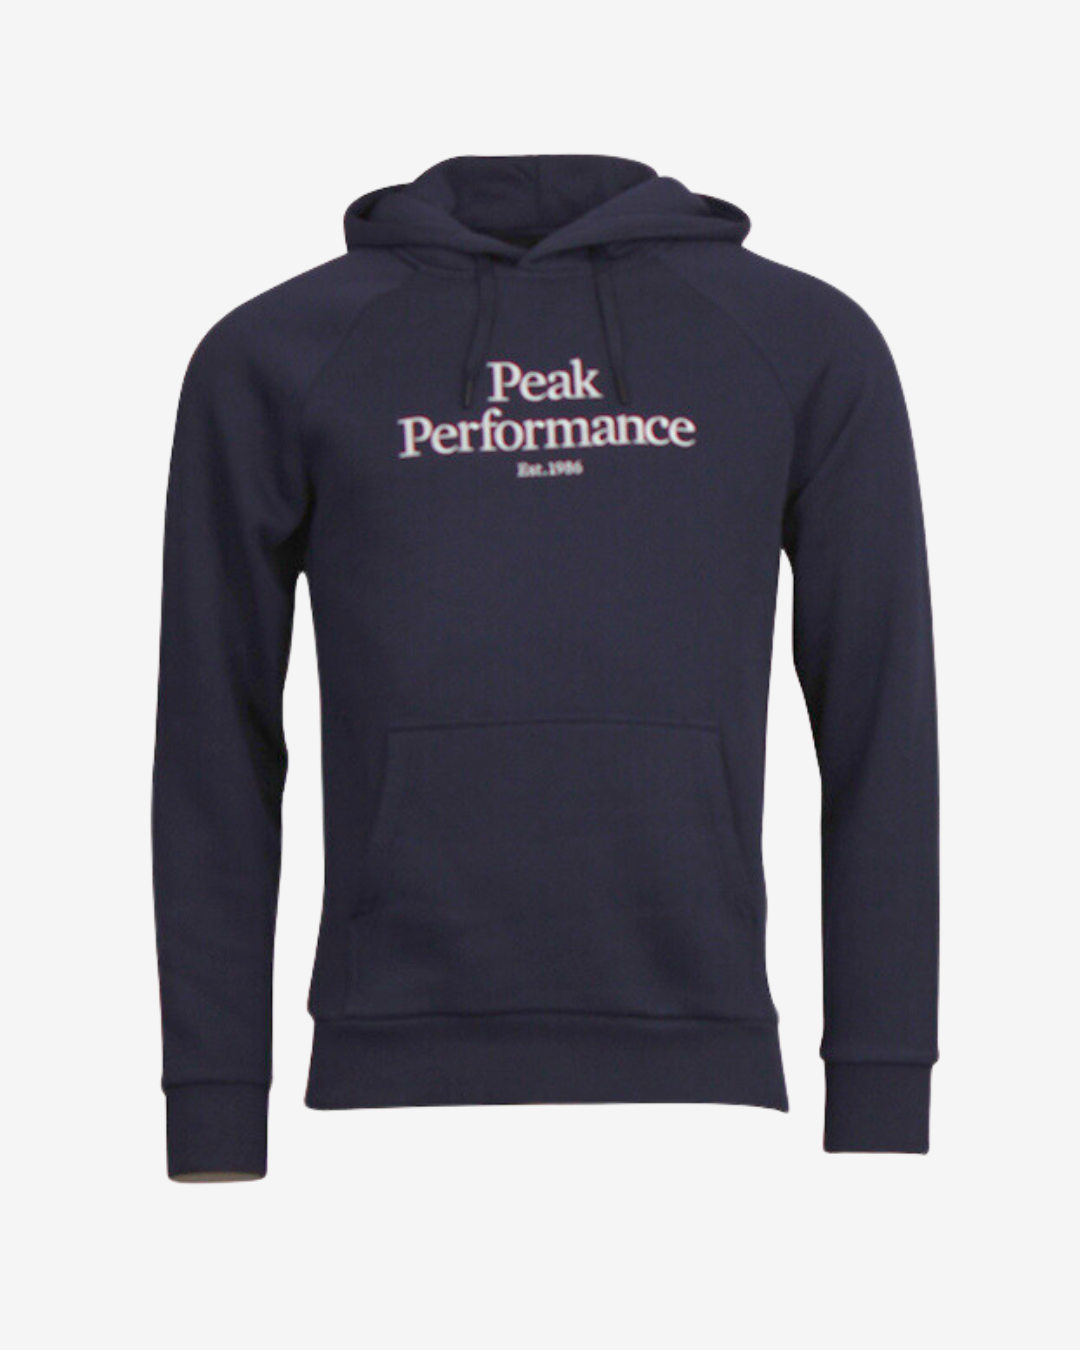 Se Peak Performance Original logo hættetrøje - Navy - Str. XXL - Modish.dk hos Modish.dk